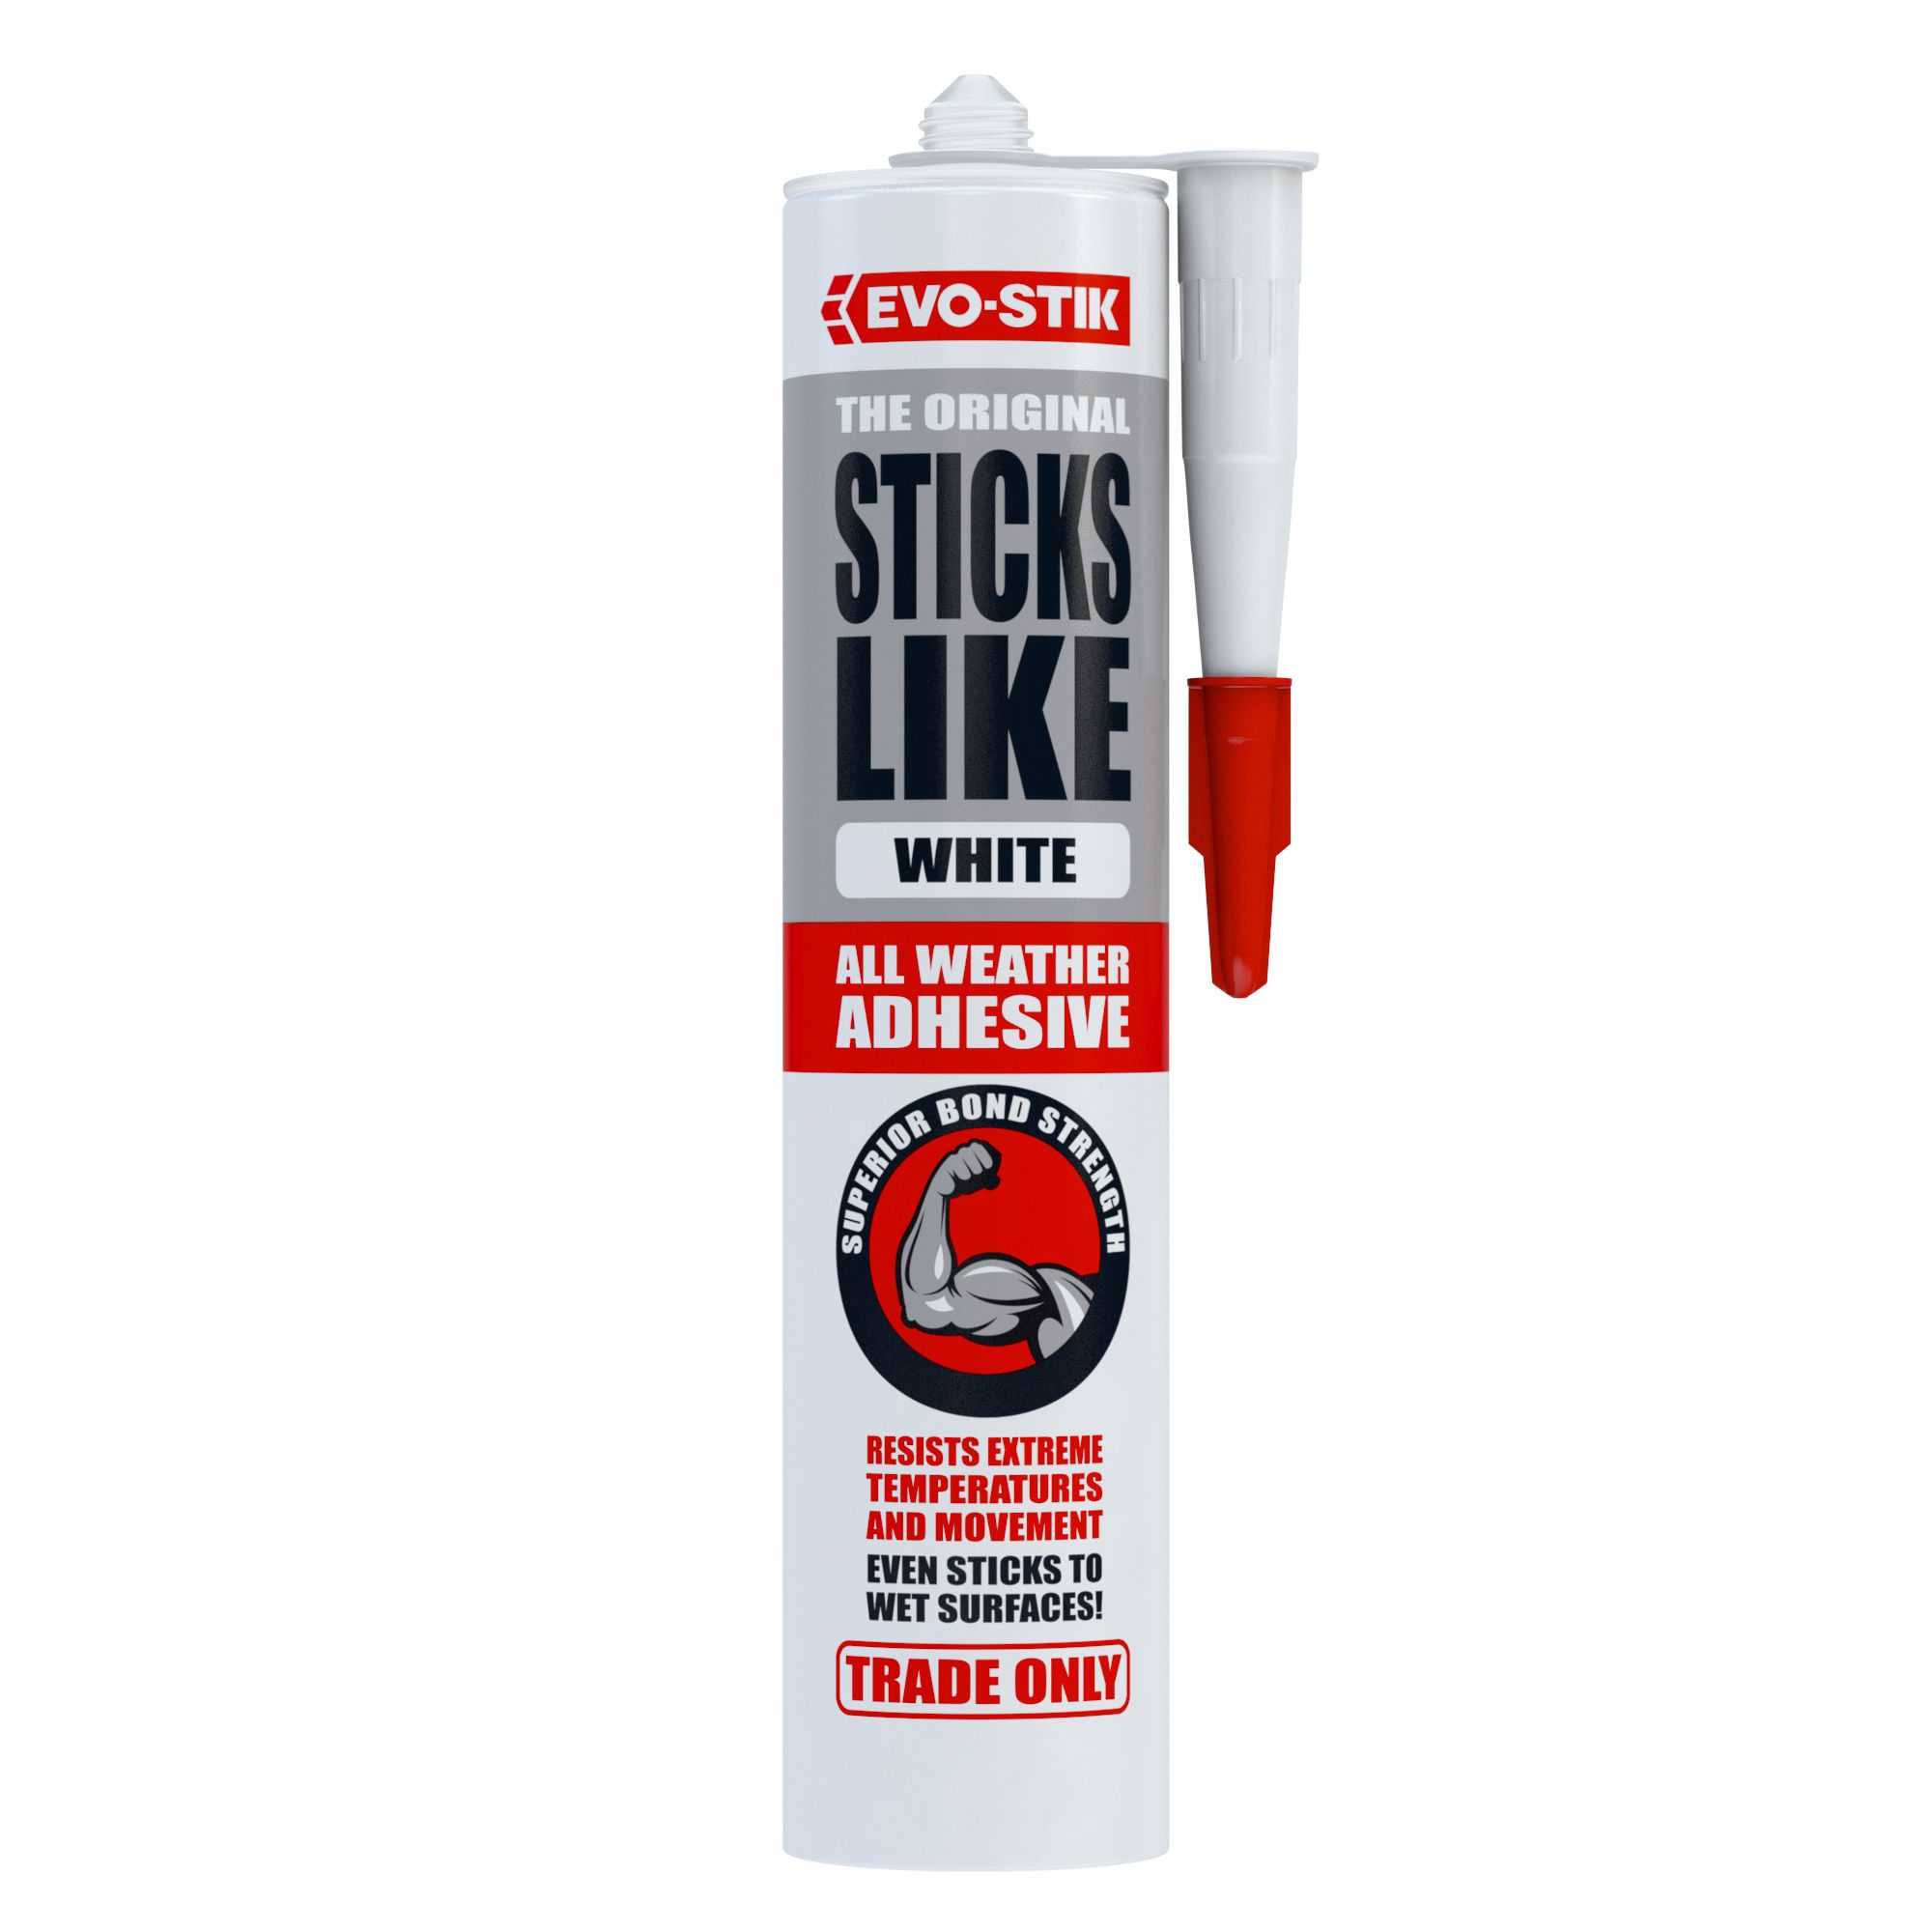 Evo-Stik Sticks Like Weatherproof Solvent-free White Grab adhesive